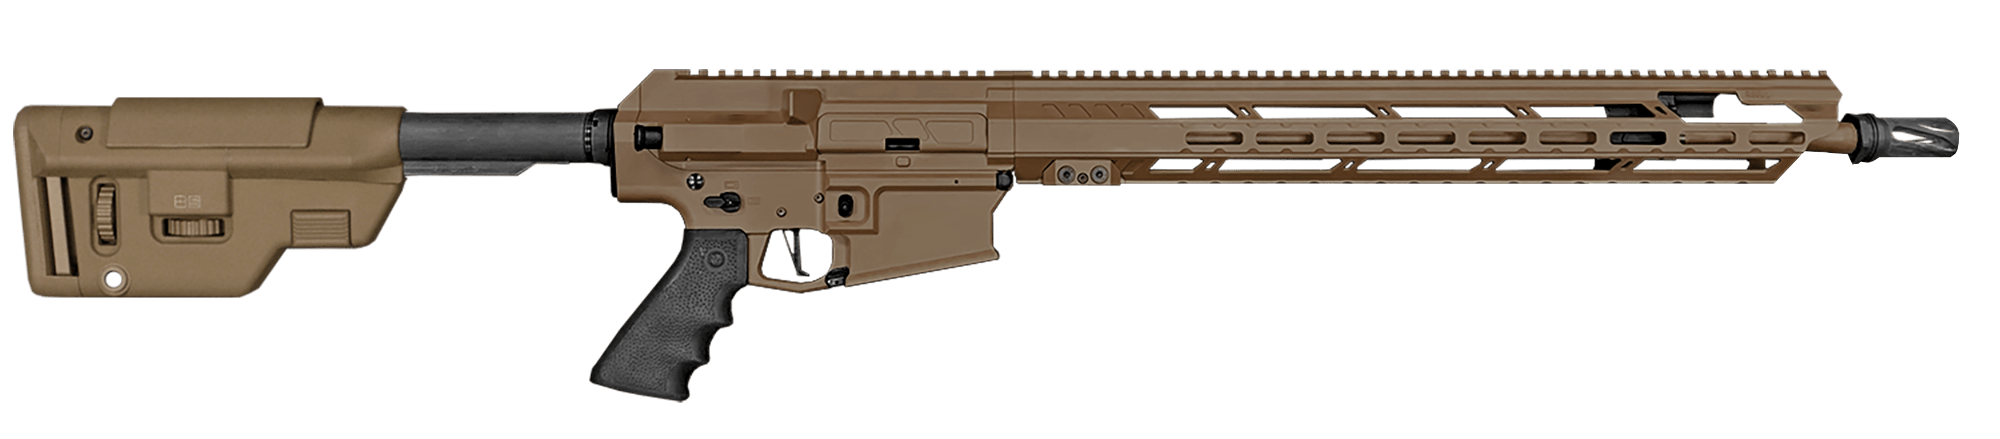 SWORD Mk-17 Mod 1 Gungnir